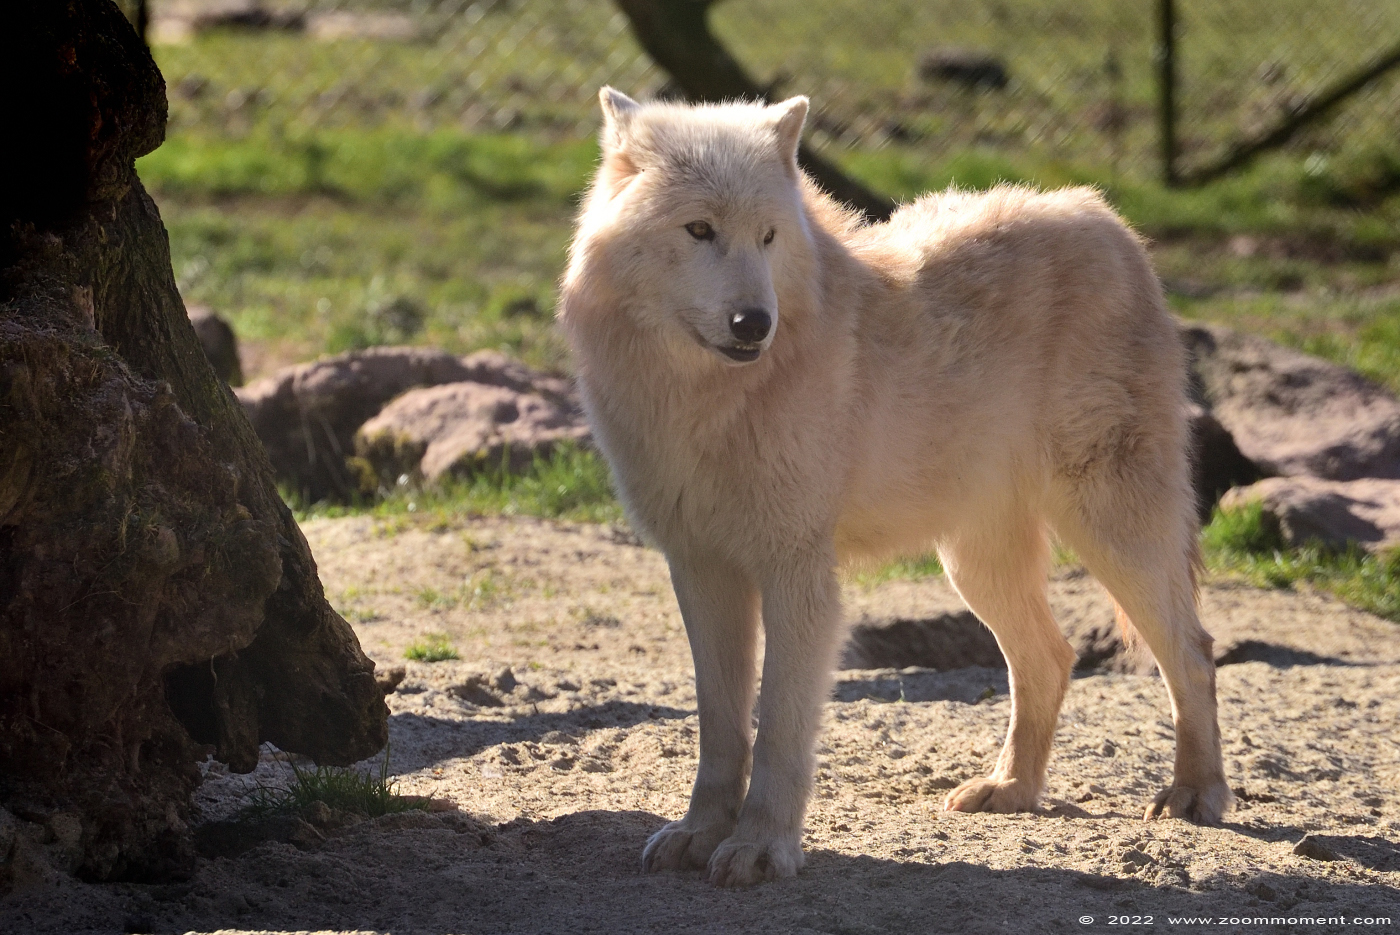 Witte wolf ( Canis lupus ) polar wolf
キーワード: Monde Sauvage Belgium Witte wolf Canis lupus polar wolf